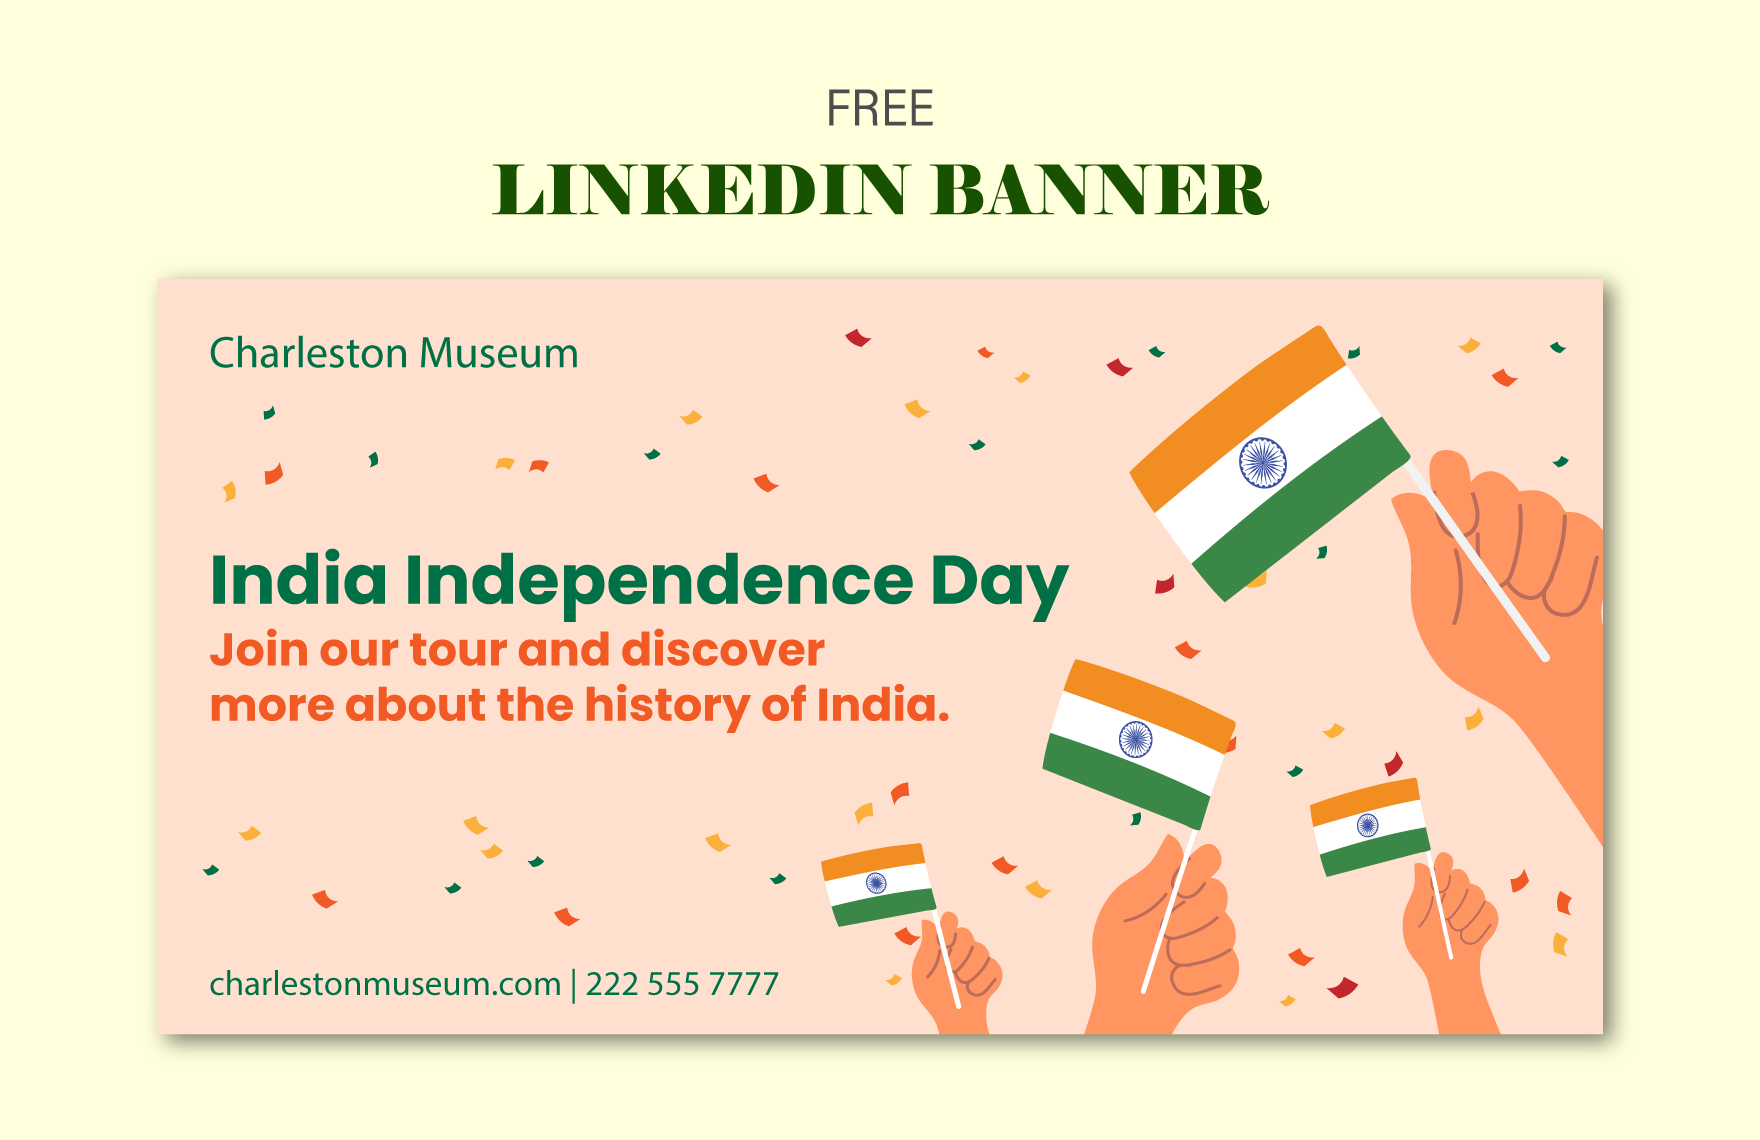 Free India Independence Day LinkedIn Banner Template in PDF, Illustrator, SVG, JPG